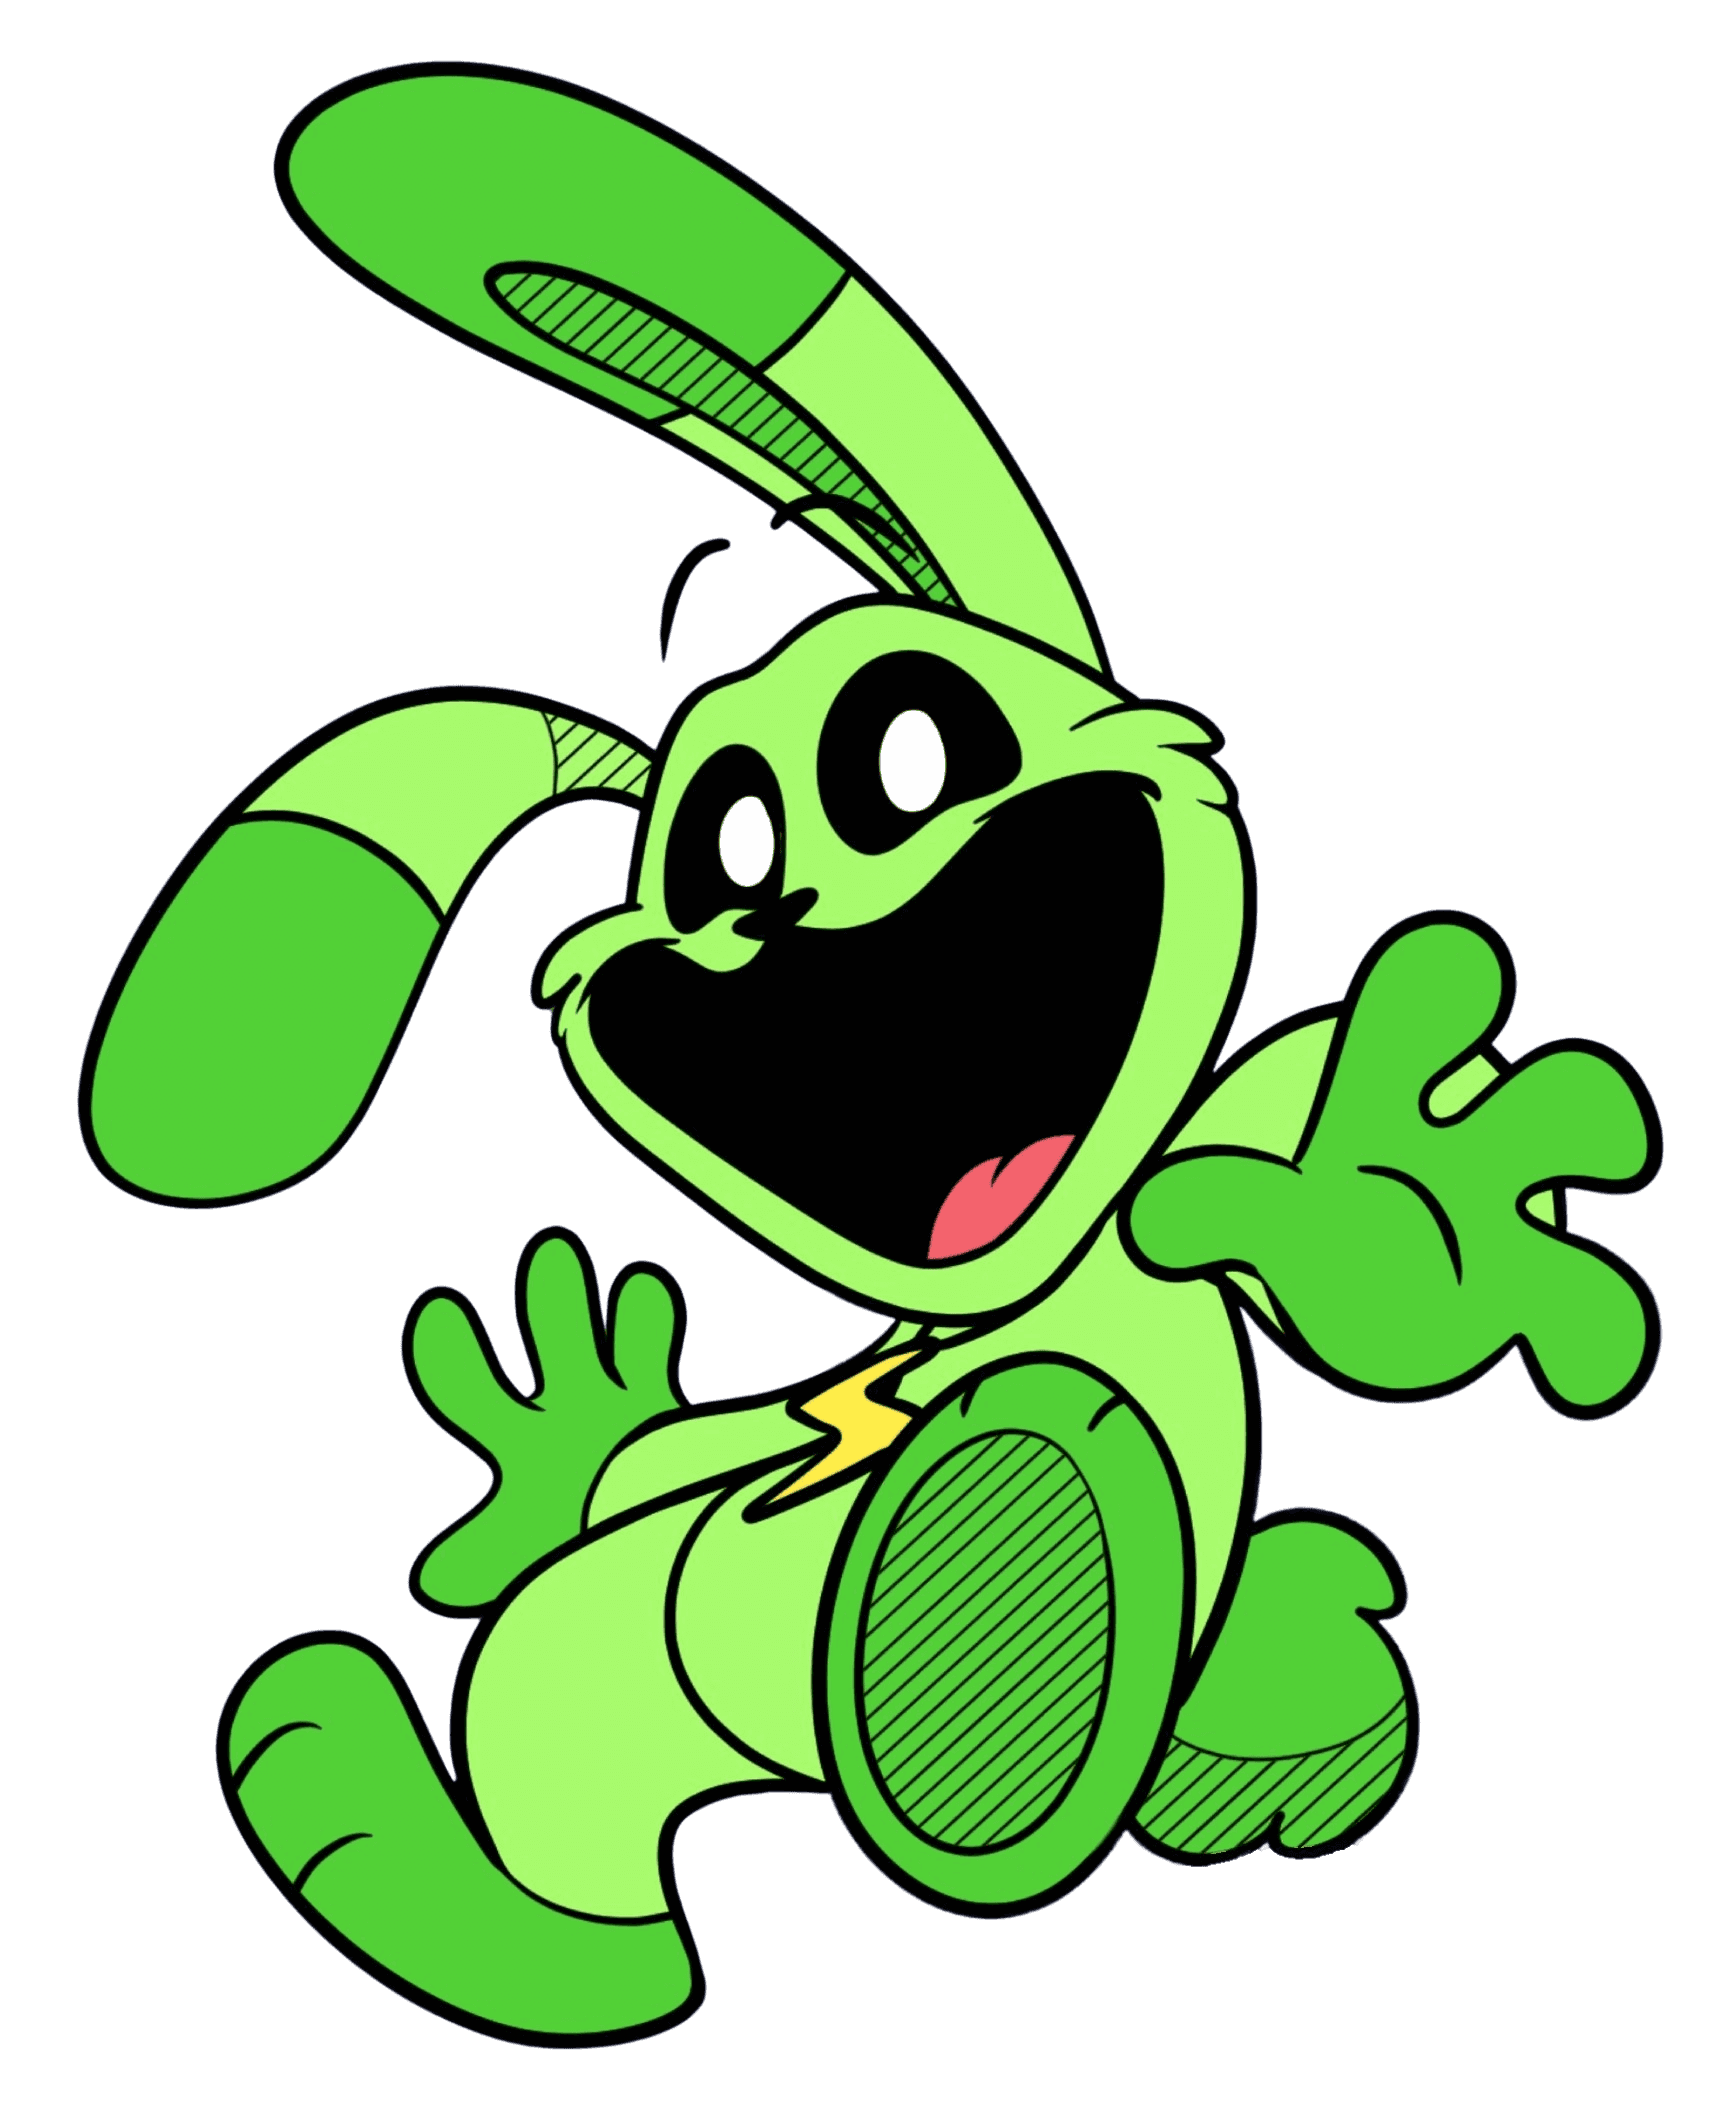 Hoppy Hopscotch (Smiling Critters / Poppy Playtime) - O